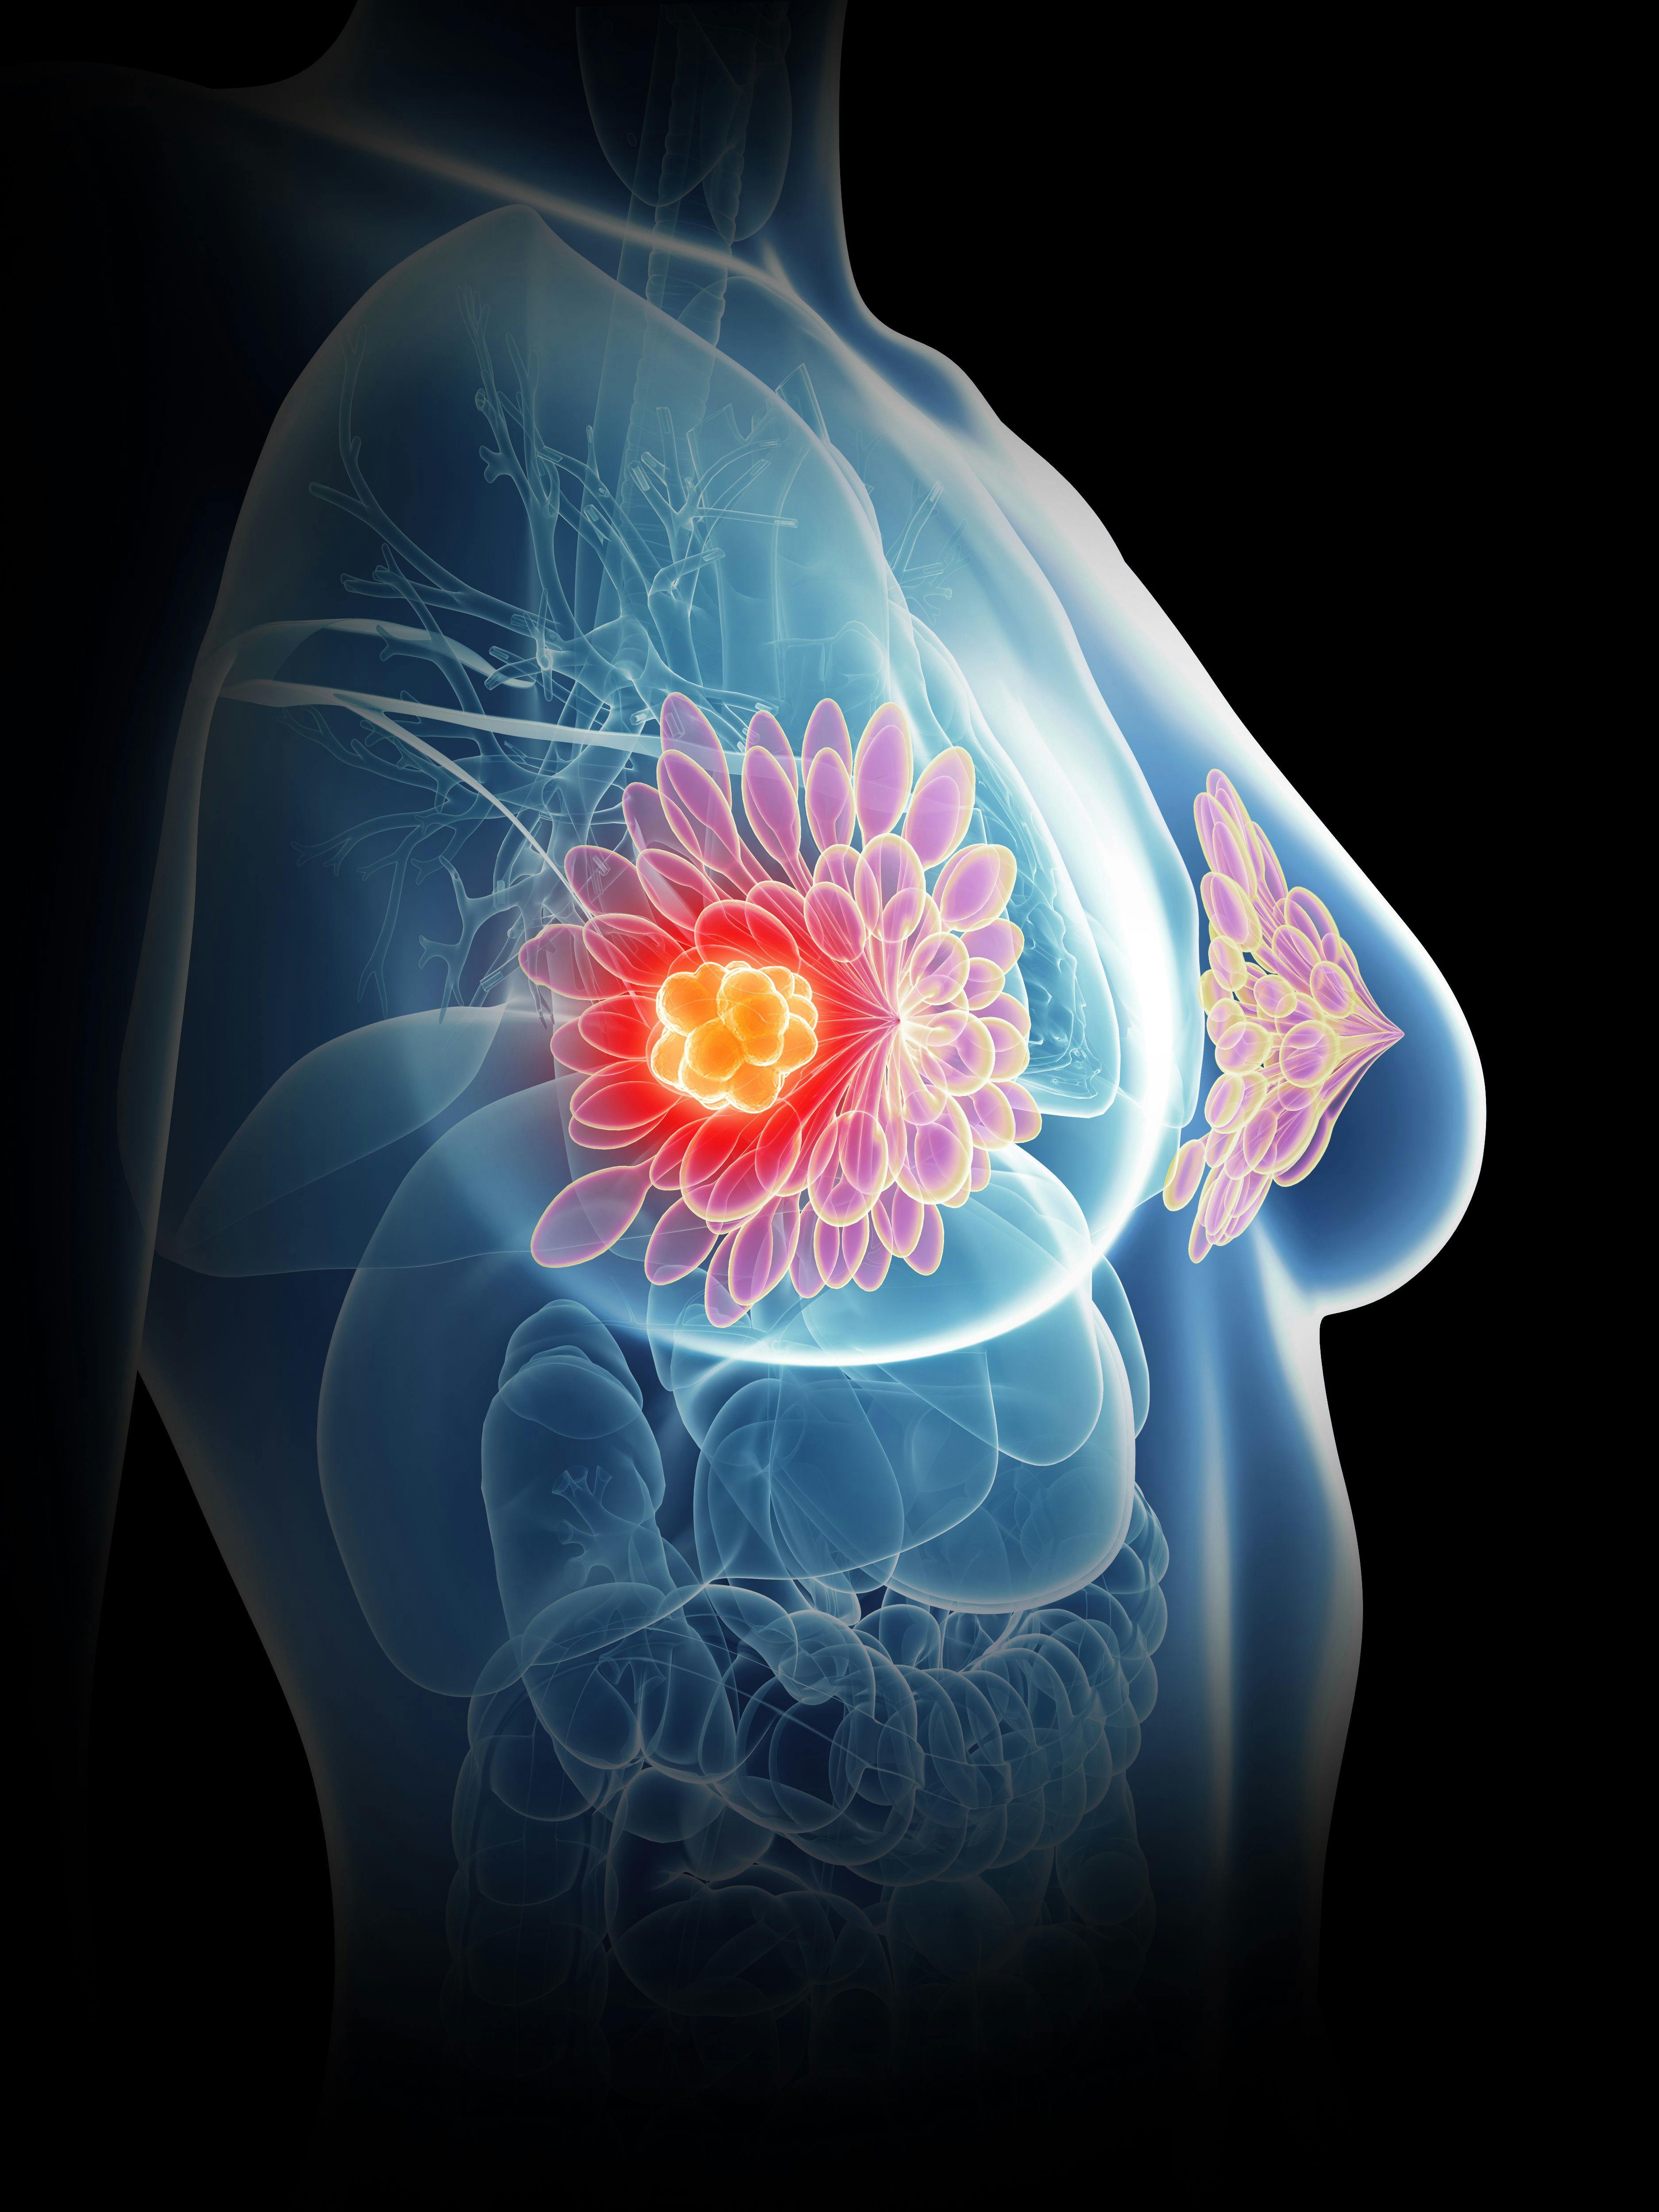 Fulvestrant Plus Capivasertib Improved Survival Vs Fulvestrant/Placebo in ER+, HER2– Advanced Breast Cancer 